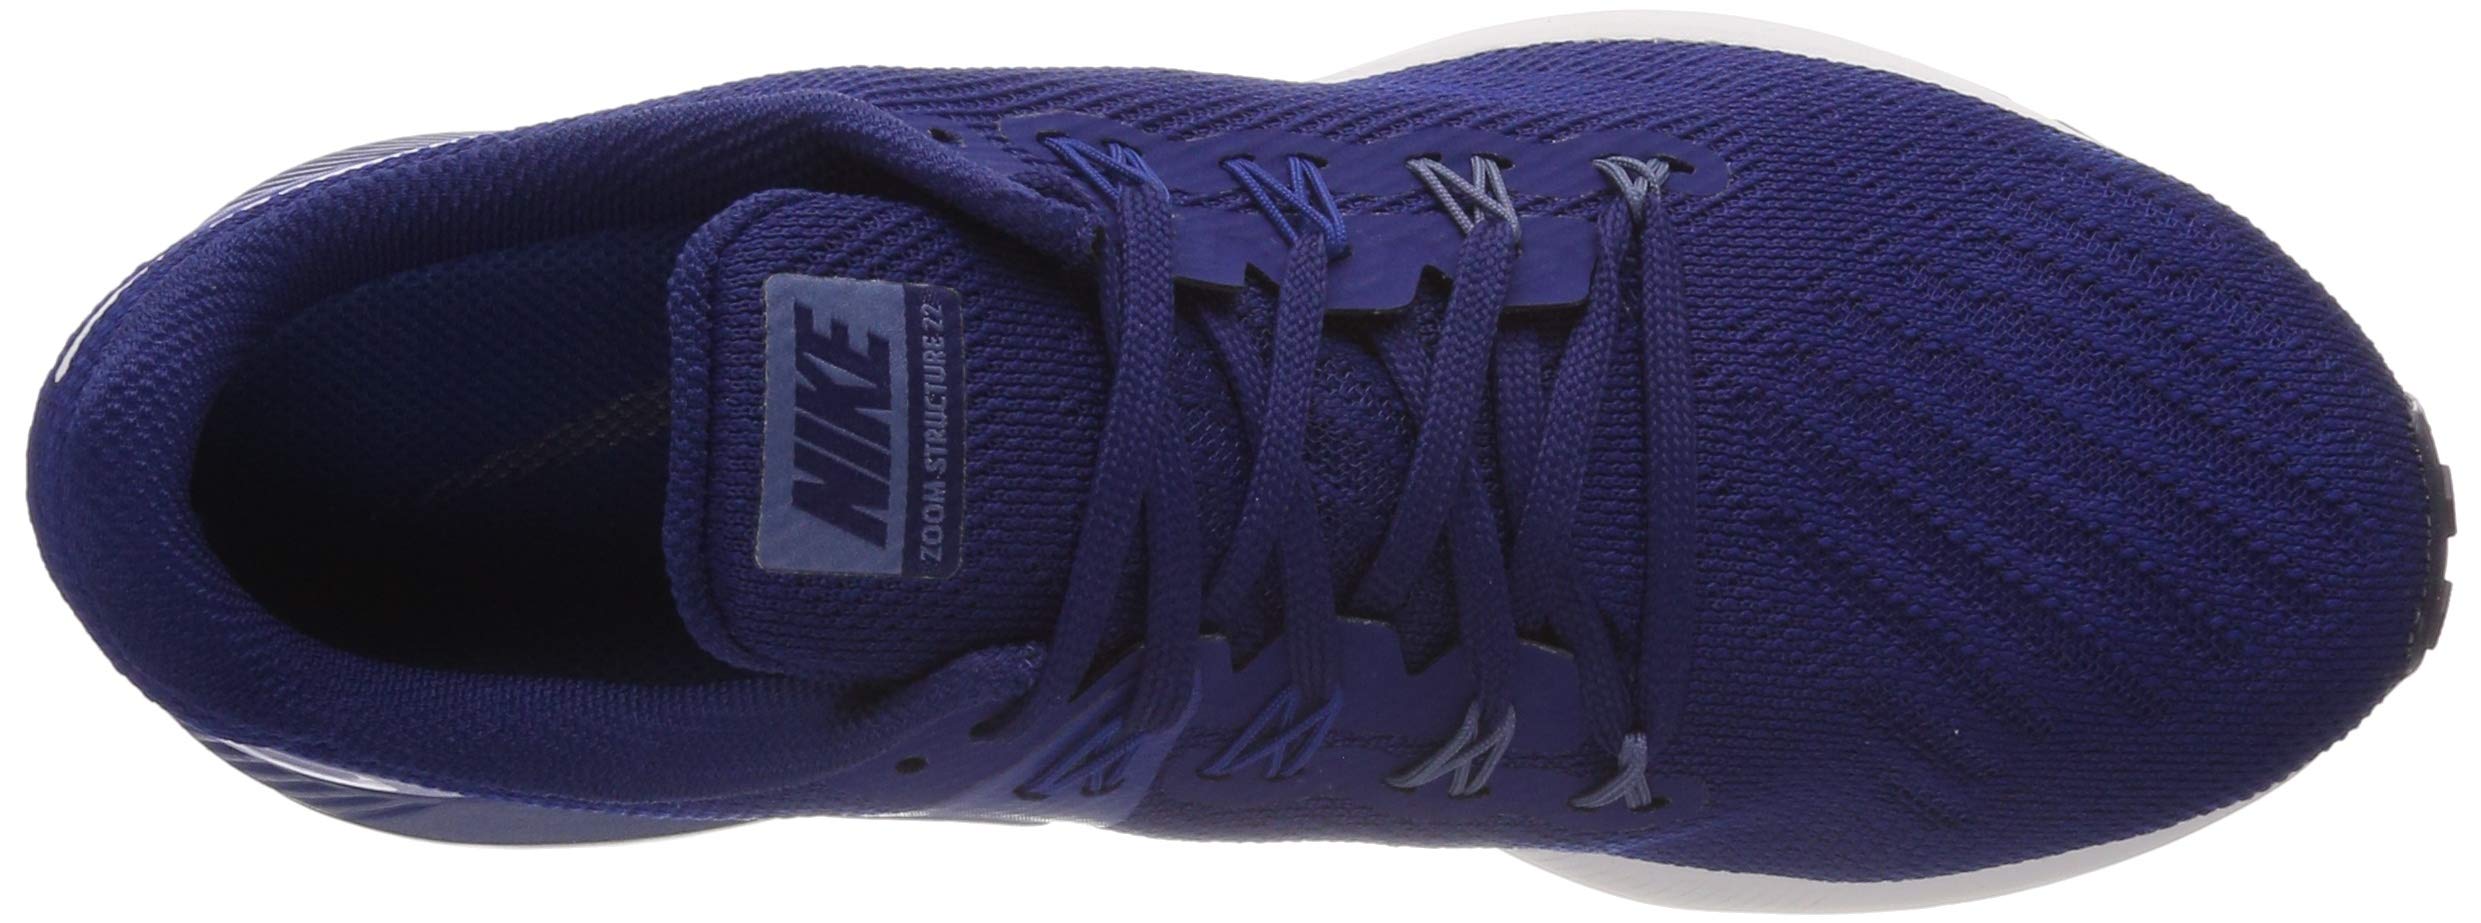 Nike AA1636-404: Men's Air Zoom Structure 22 Blue Void/Vast Grey/Gym Blue Shoe (10.5 D(M) US Men) - image 5 of 7